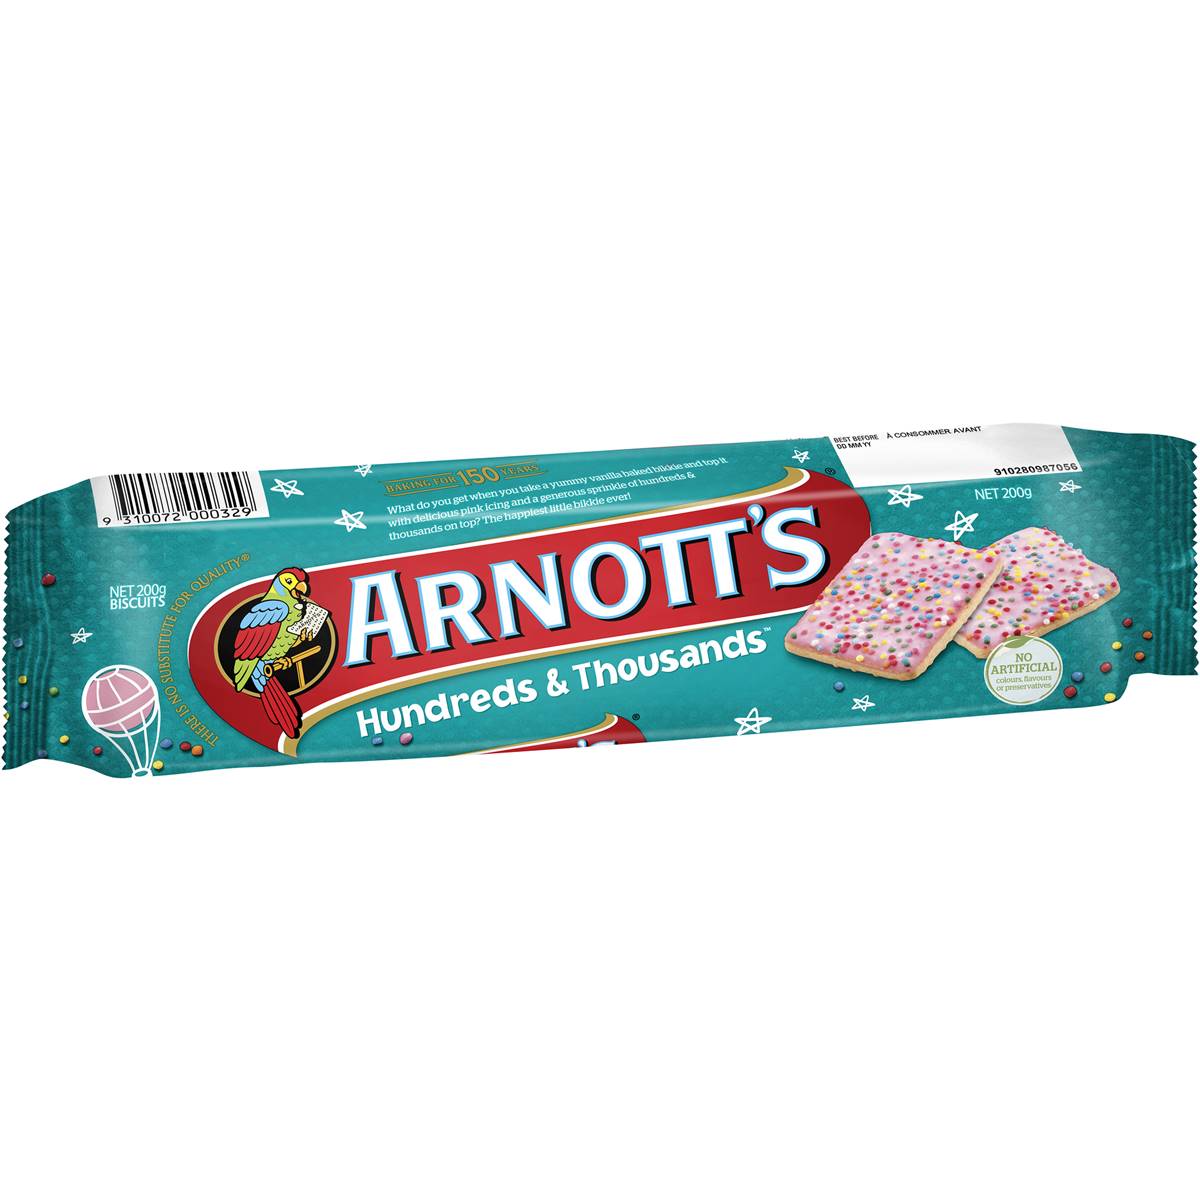 Arnott's Hundreds & Thousands Biscuits 200g